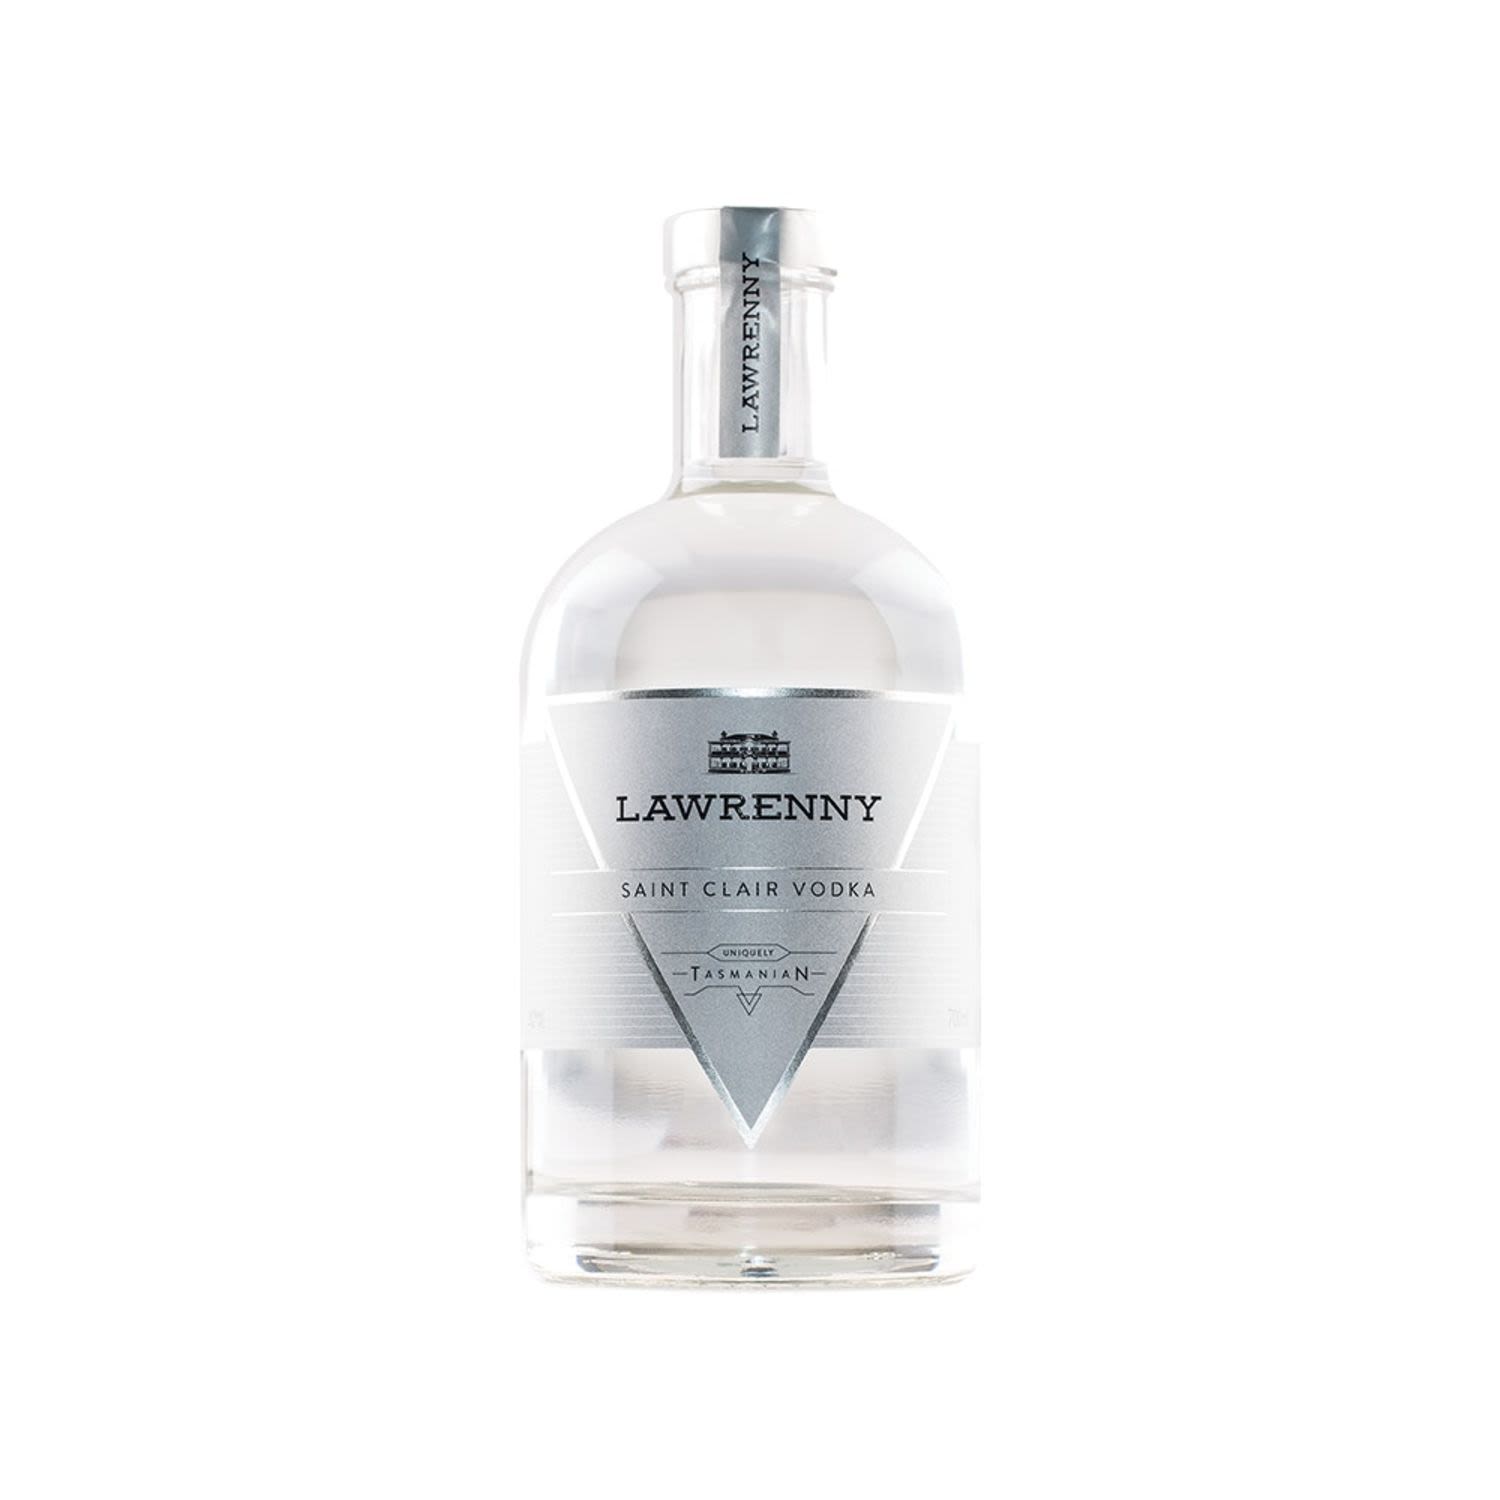 Lawrenny Saint Clair Vodka 700mL Bottle